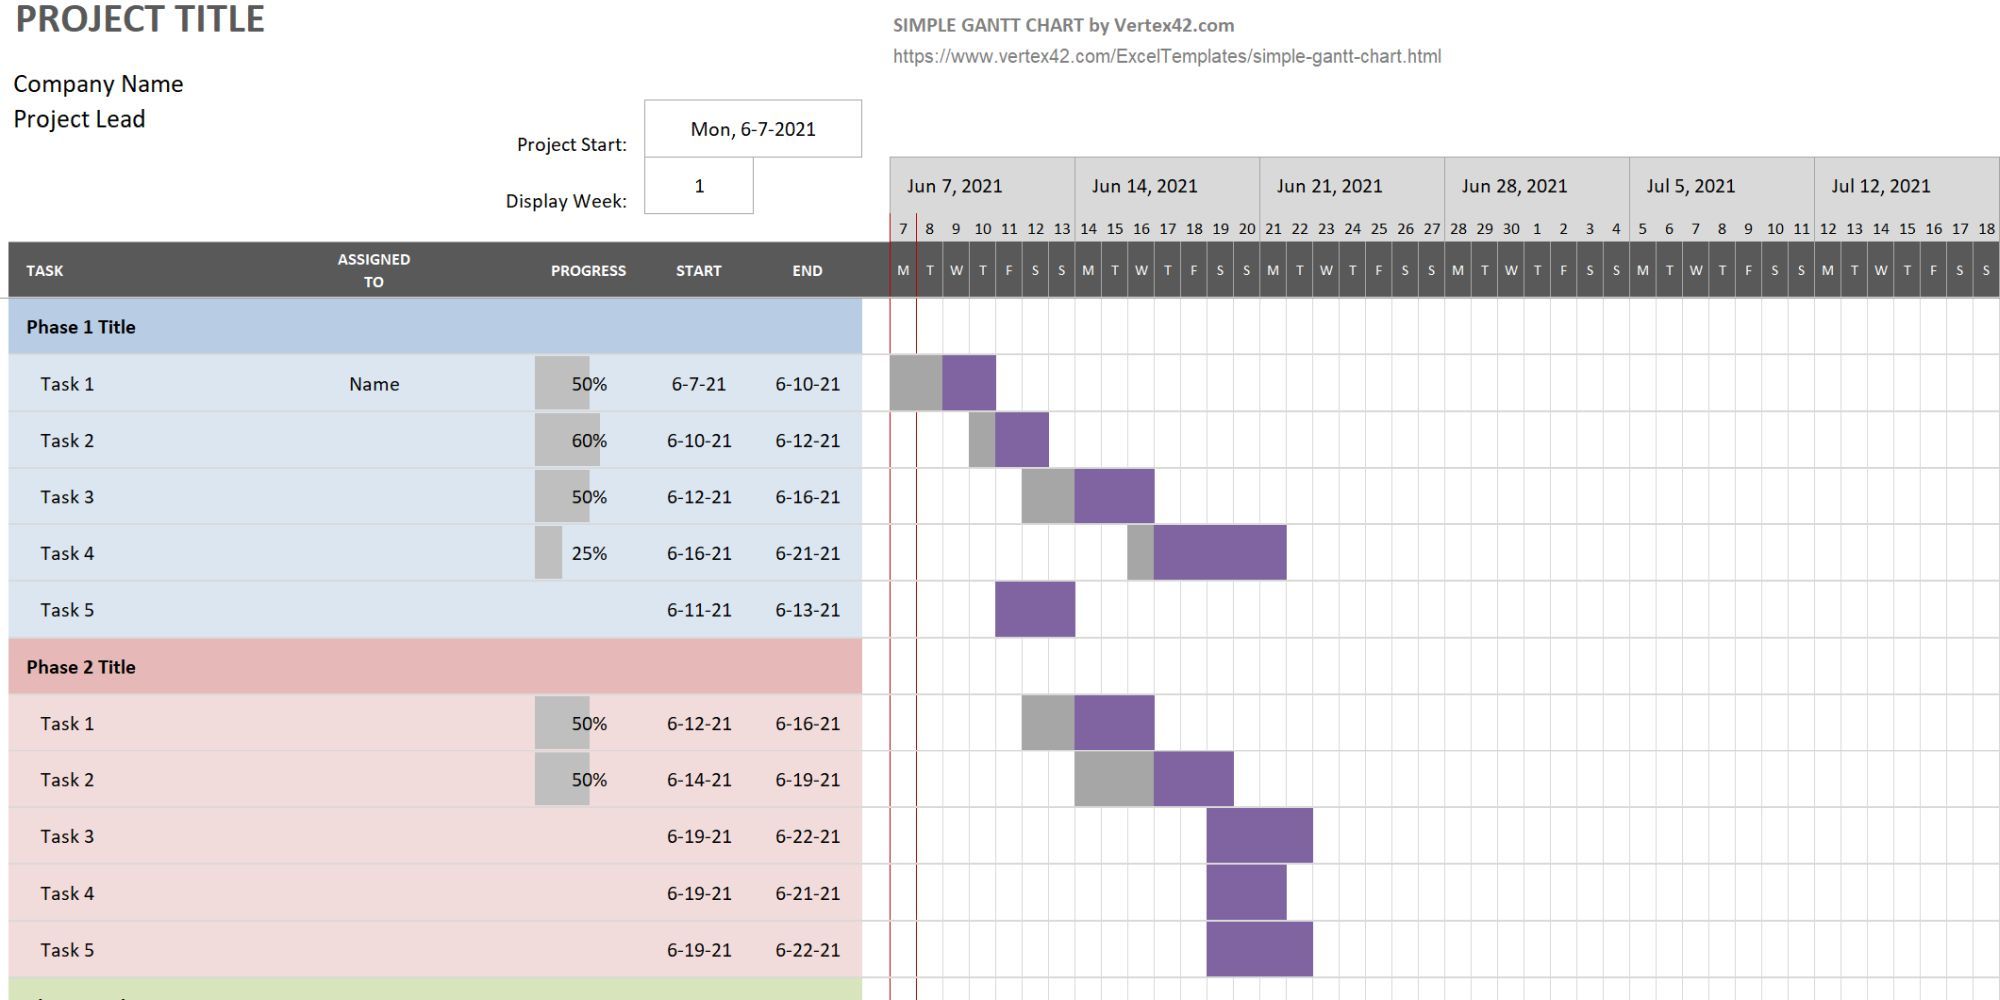 Simple Gantt Chart template in Microsoft Excel